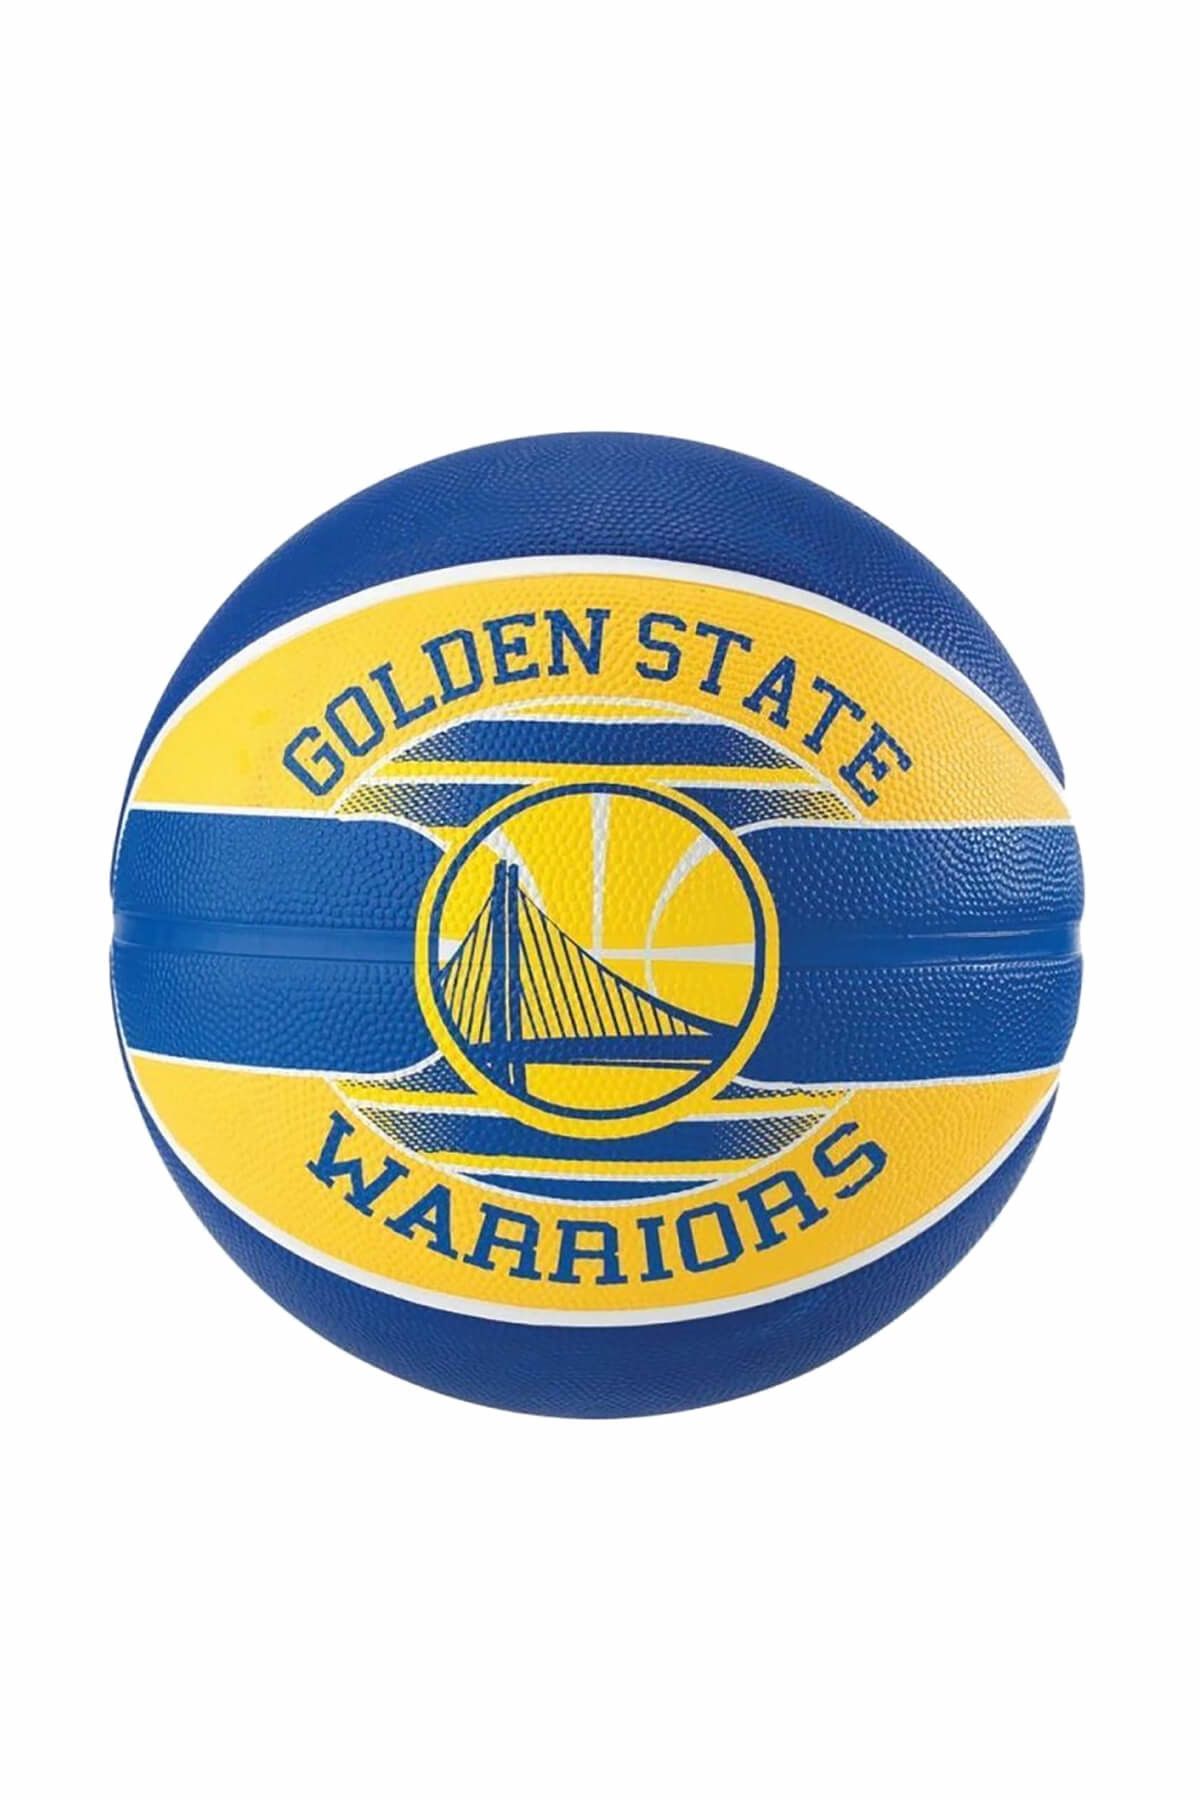 Spalding Spalding NBA Team Golden State Warriors Basketbol Topu 83-515Z